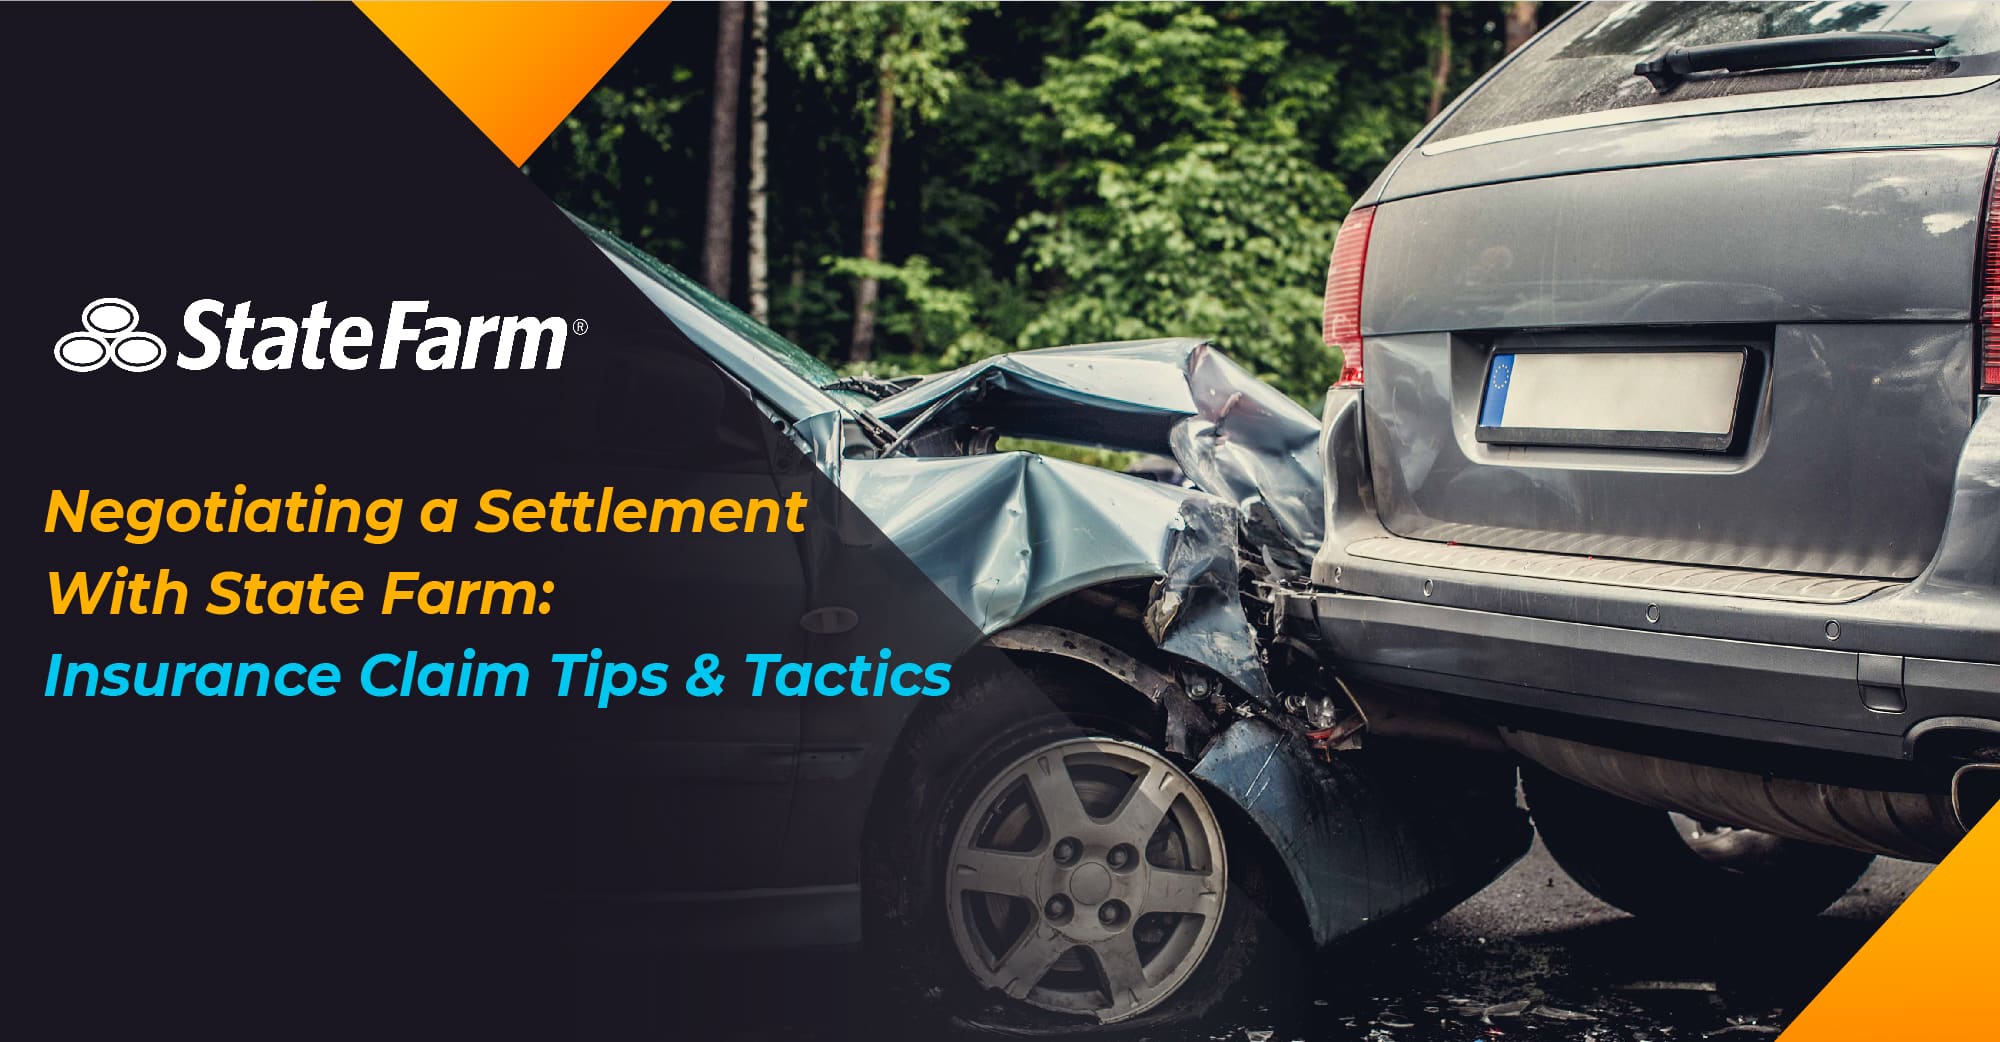 Stolen Car Insurance Claim Lawyer: Maximizing Your Compensation